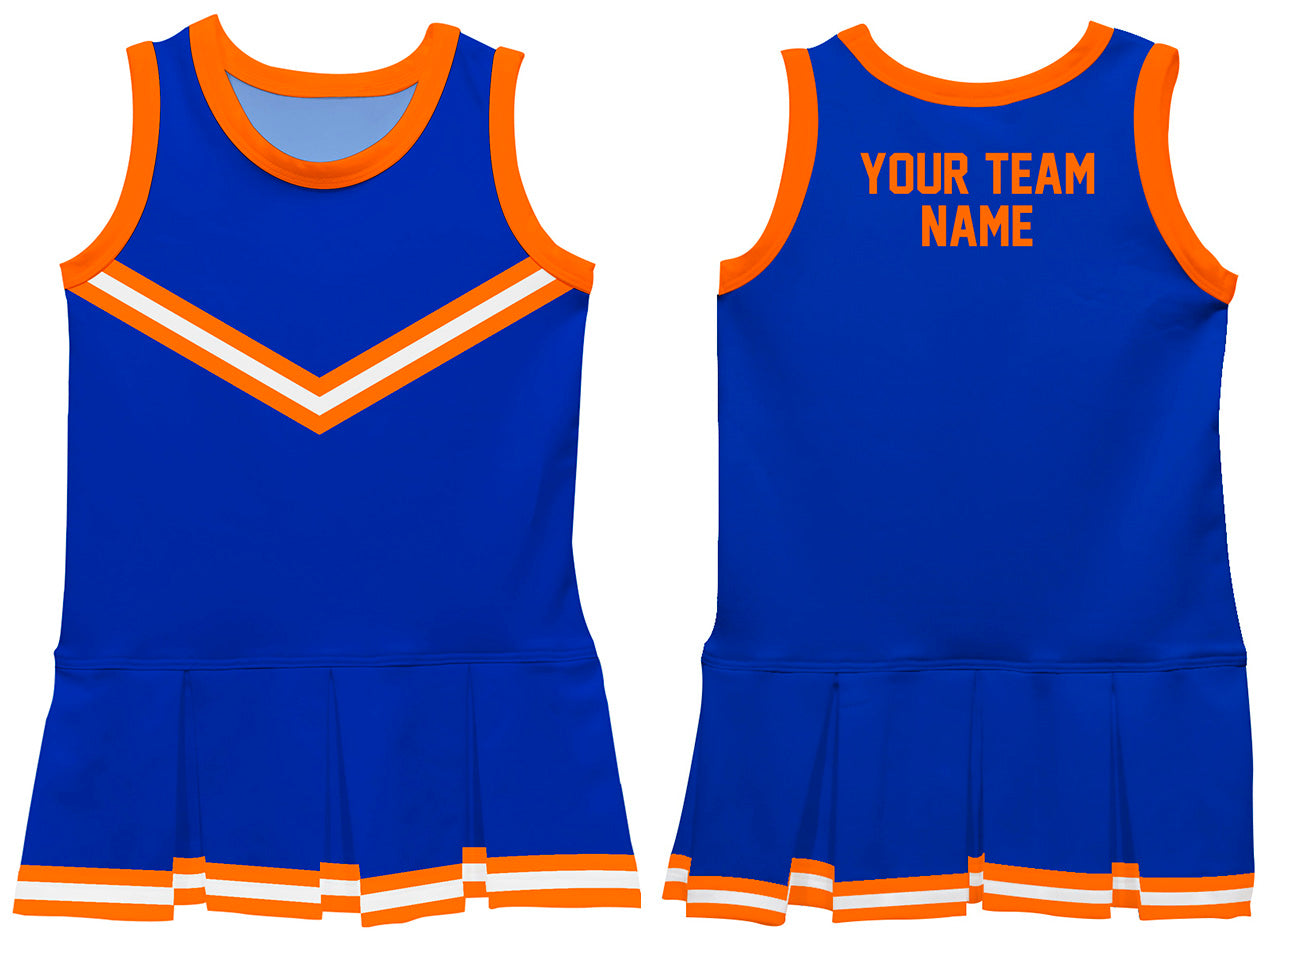 Royal Orange Sleeveless Girl Cheerleader Dress - Wimziy&Co.